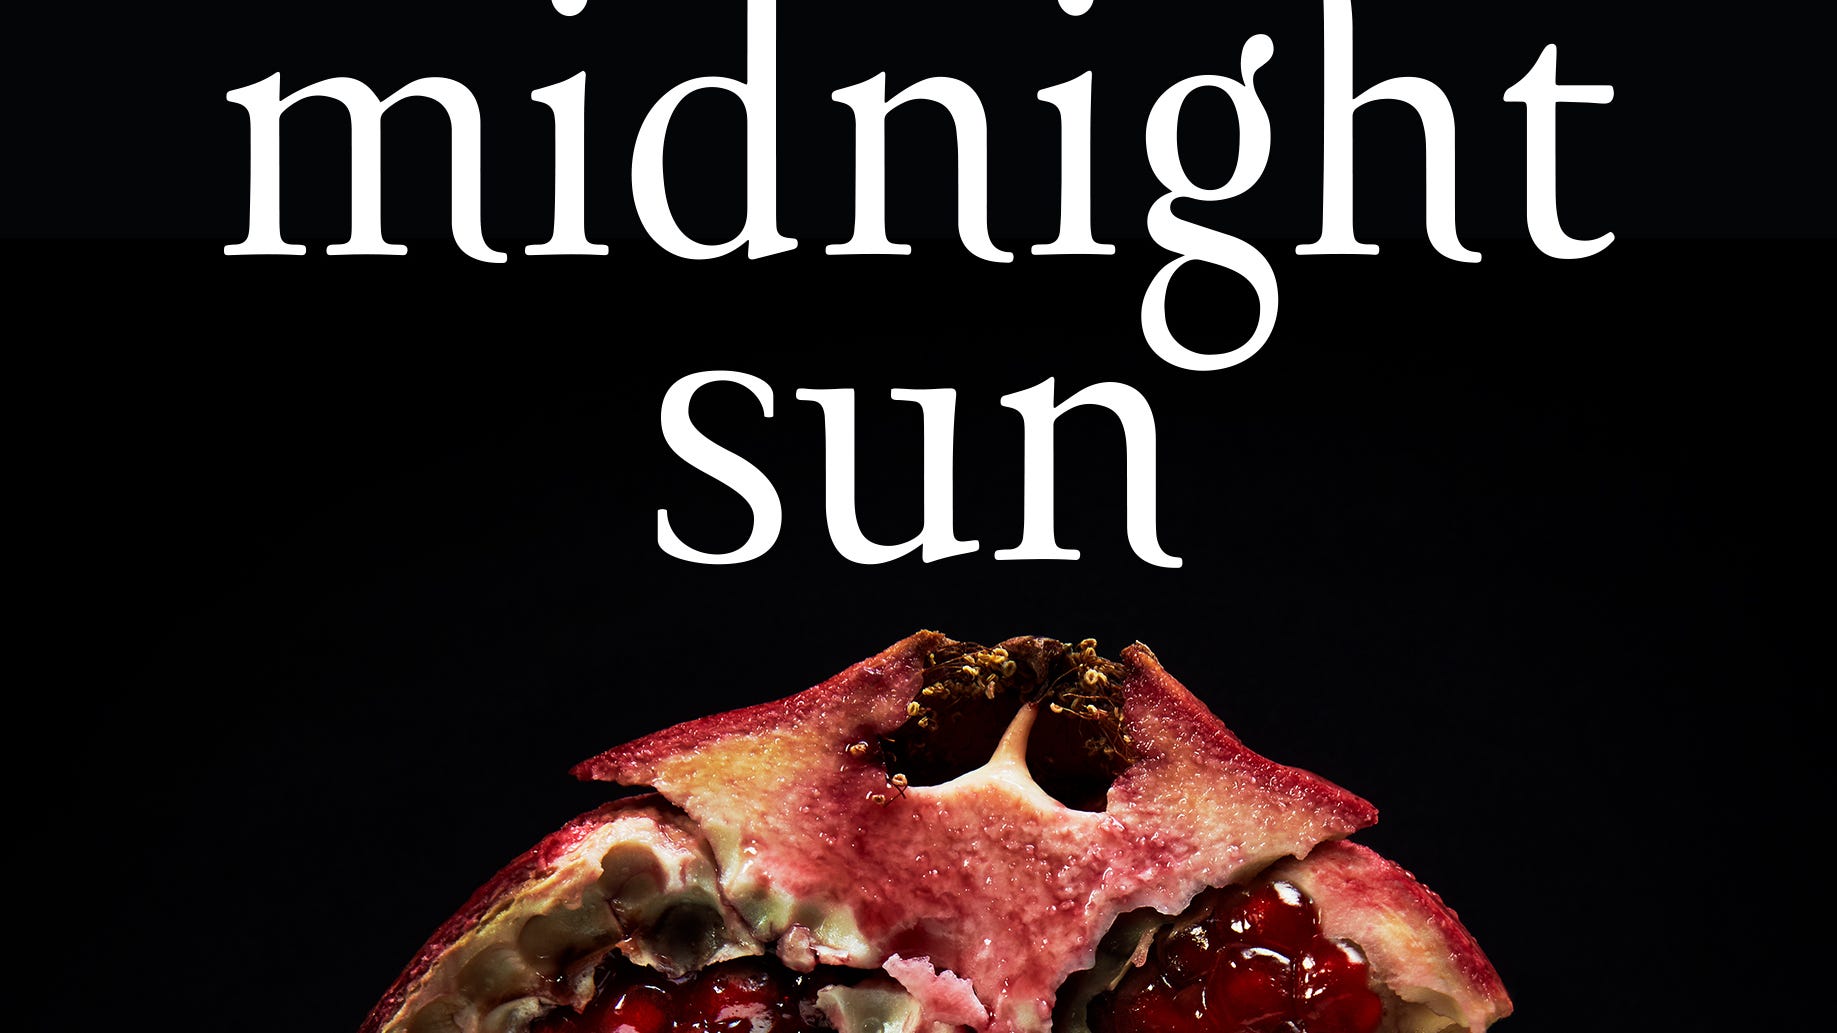 The newest twilight spin off novel midnight sun.